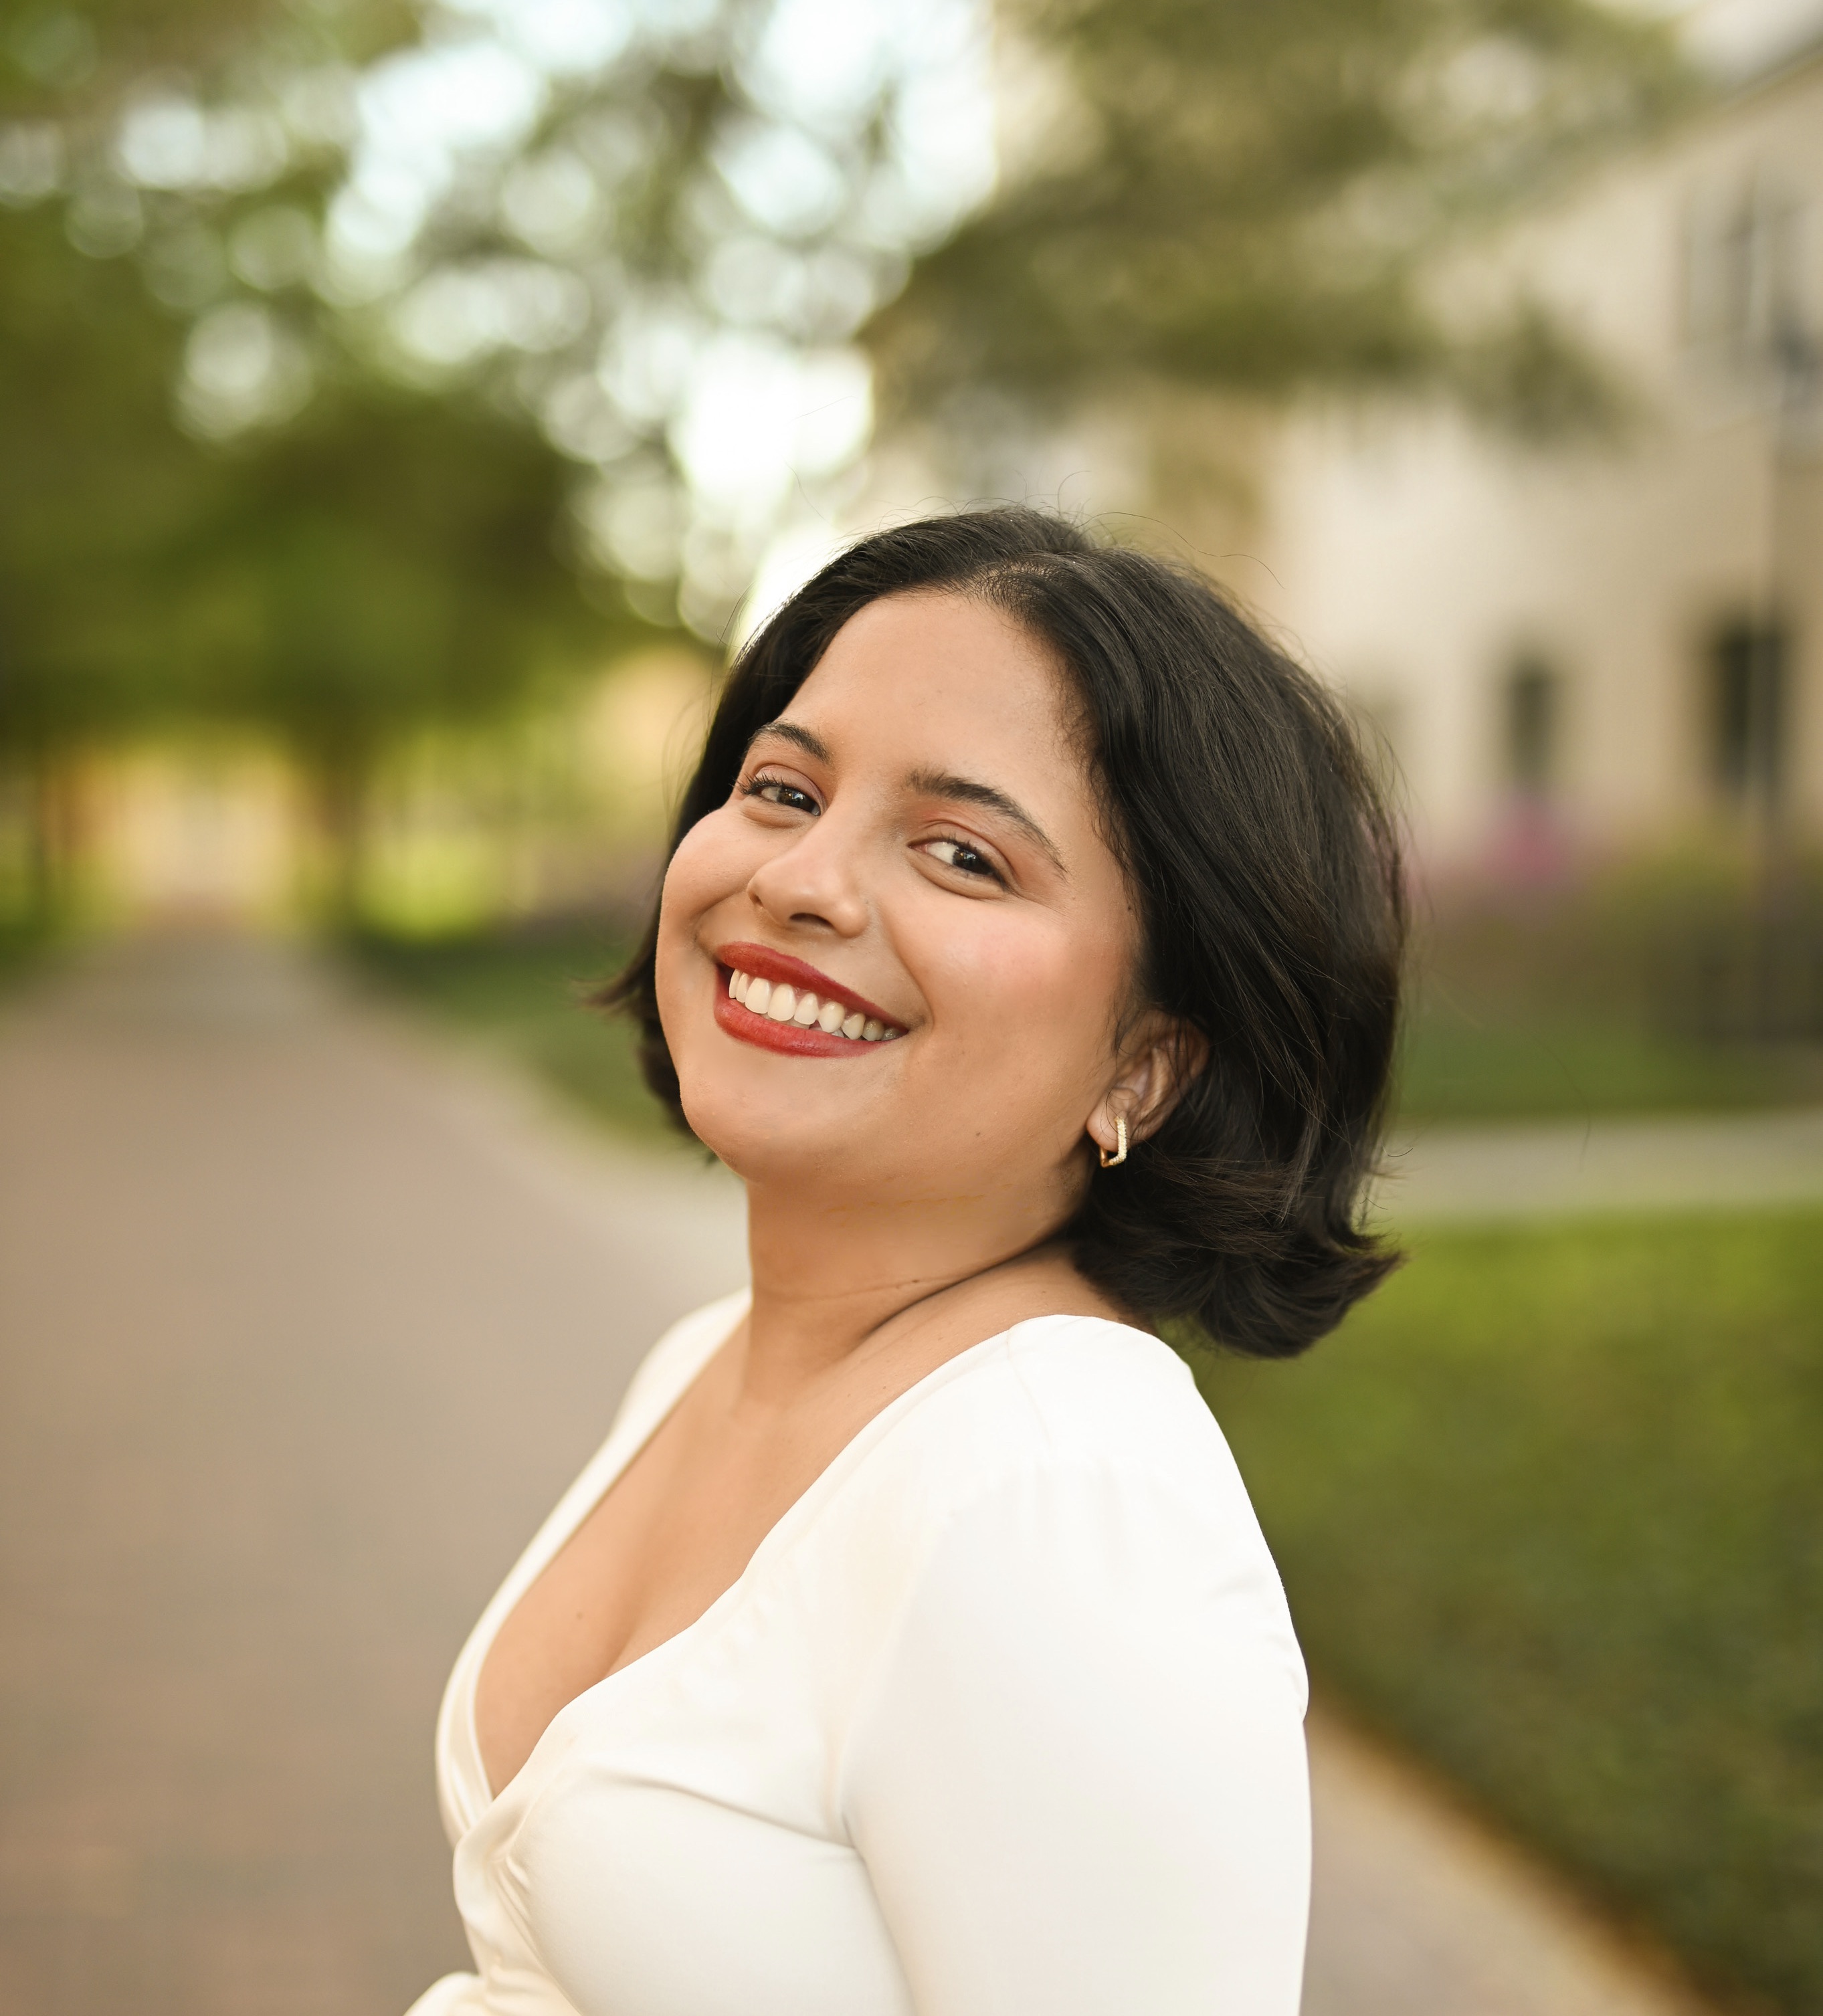 Vanessa Martinez, Portfolio of Personal and Academic Work